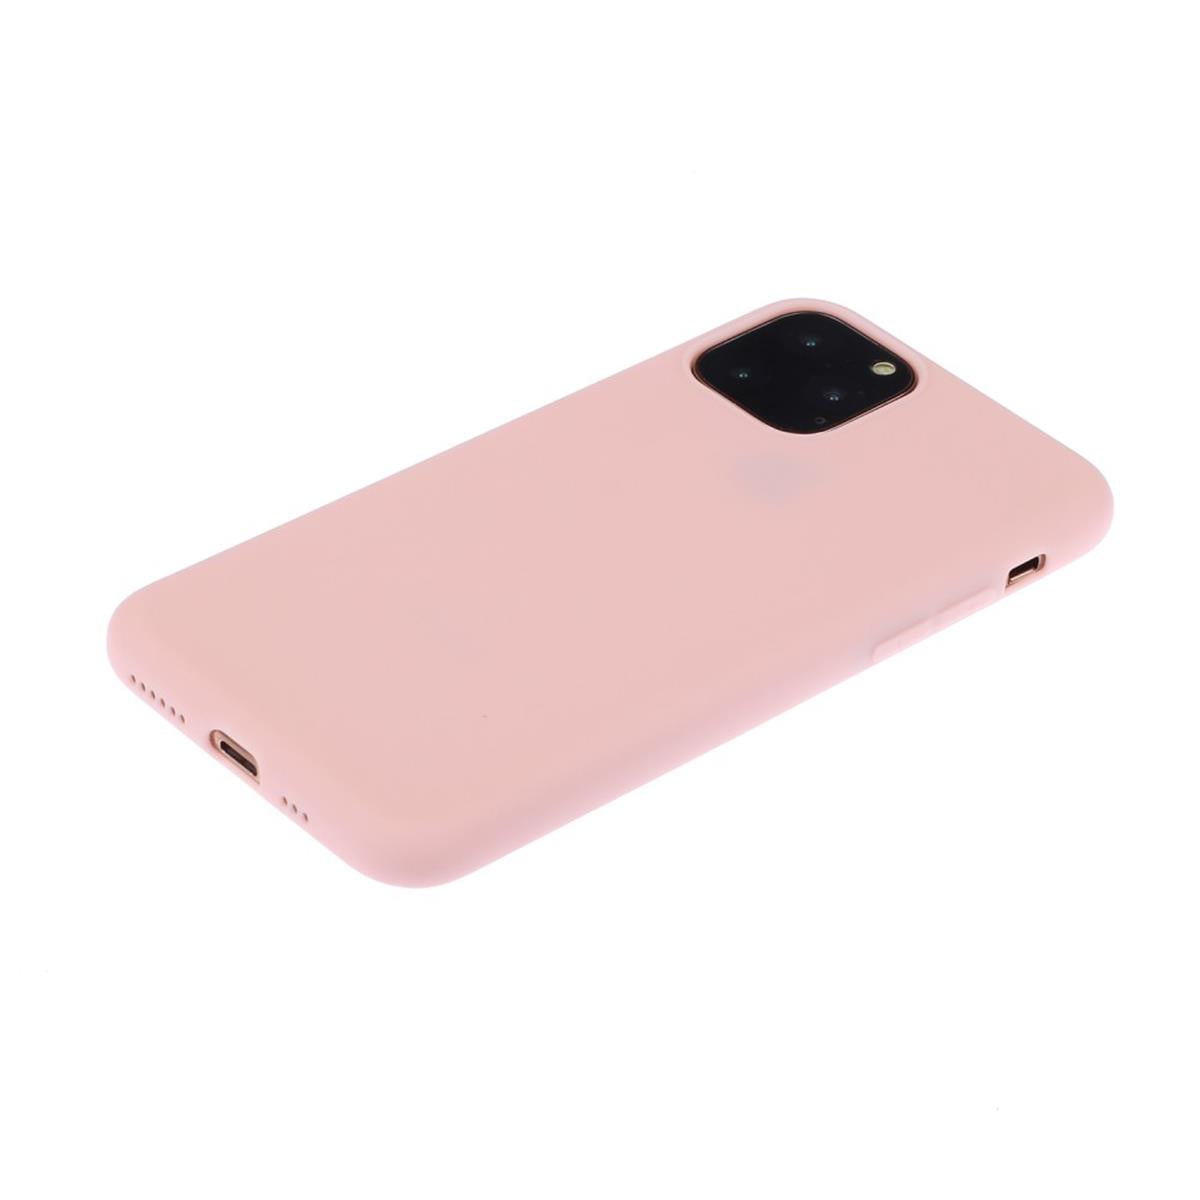 Hülle für Apple iPhone 11 Pro [5,8 Zoll] Handyhülle Silikon Cover Case Etui Rosa